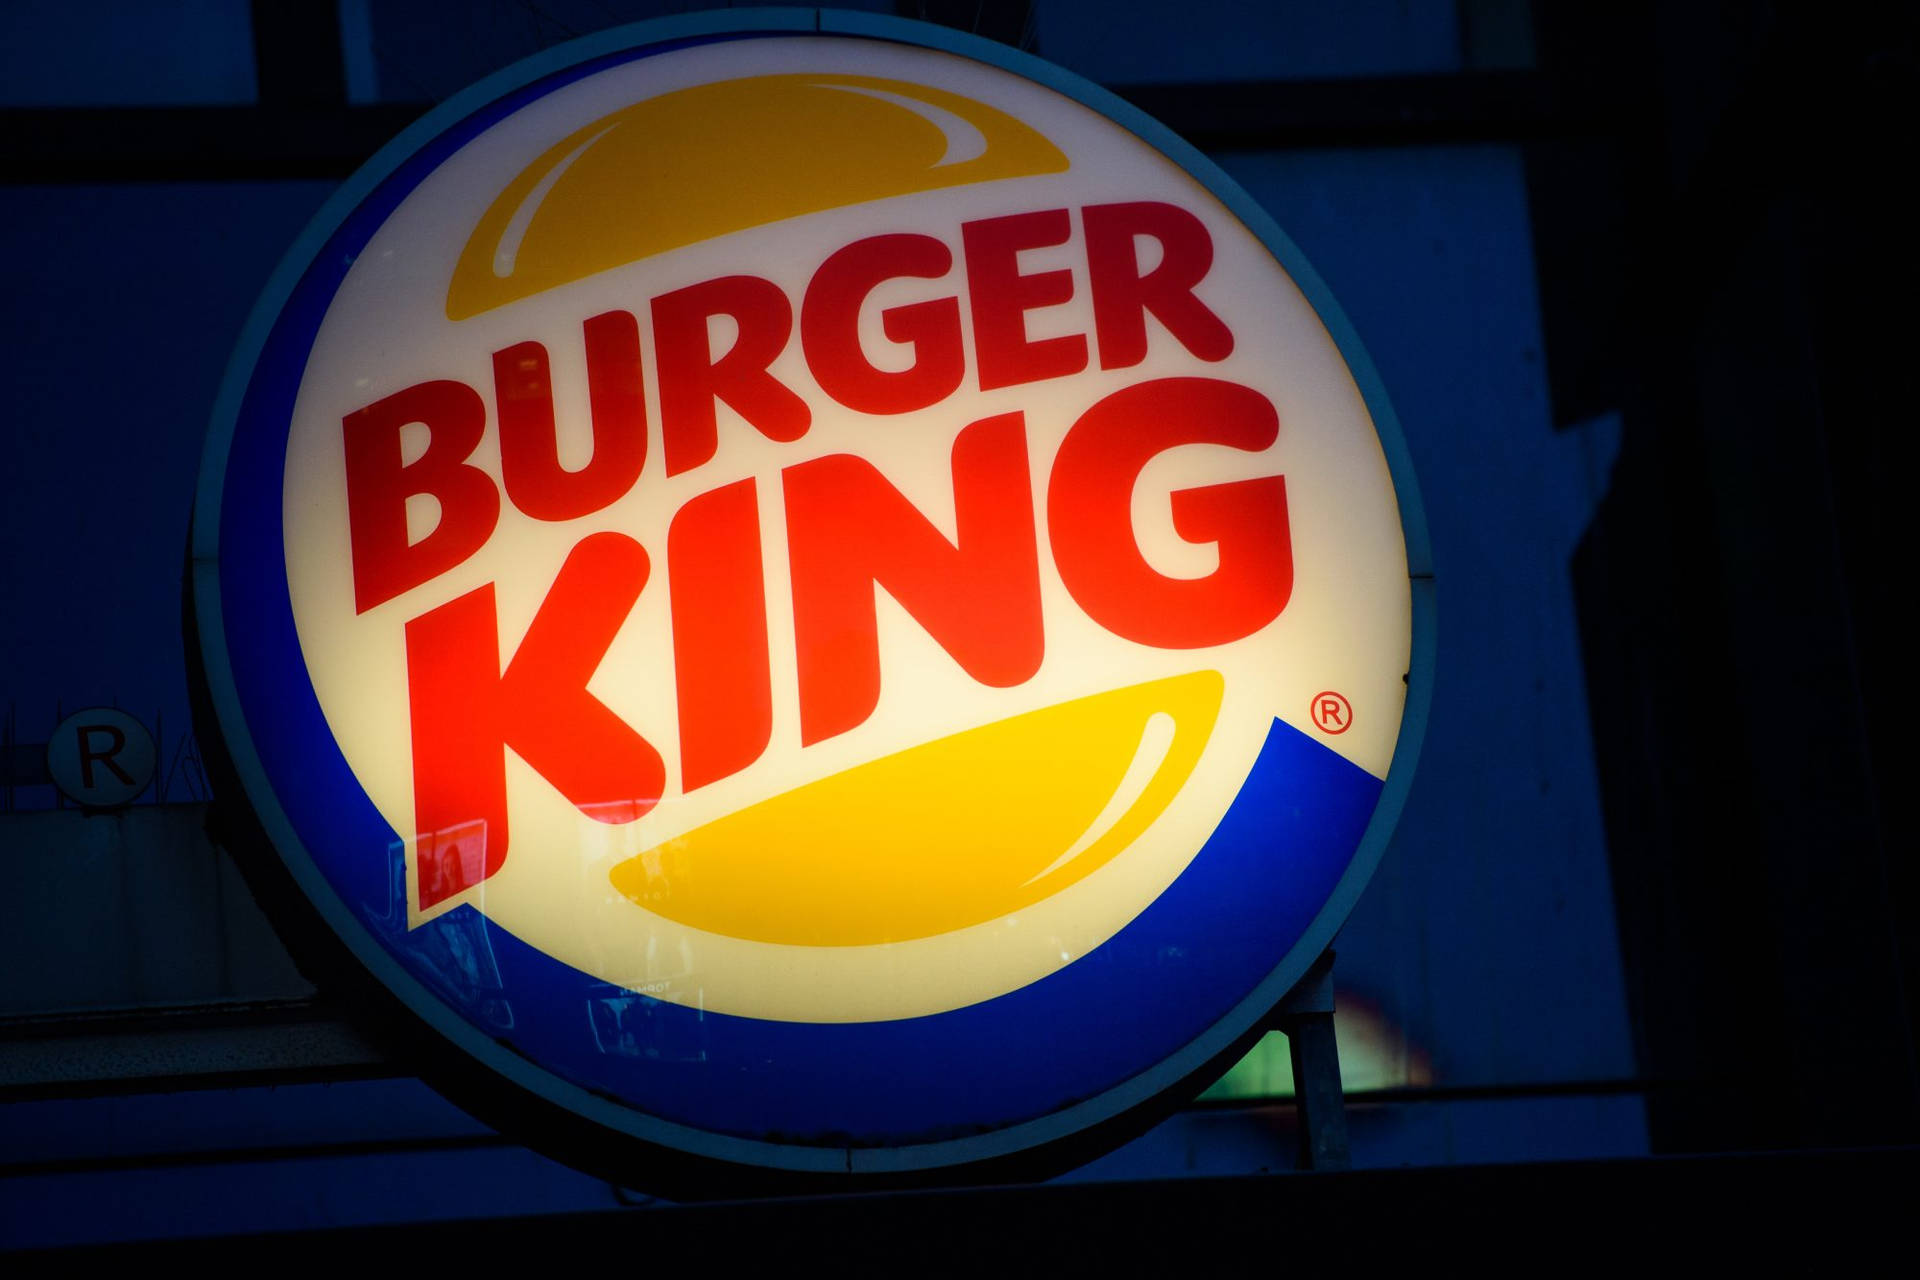 Captivating Night View Of Burger King Signage Background